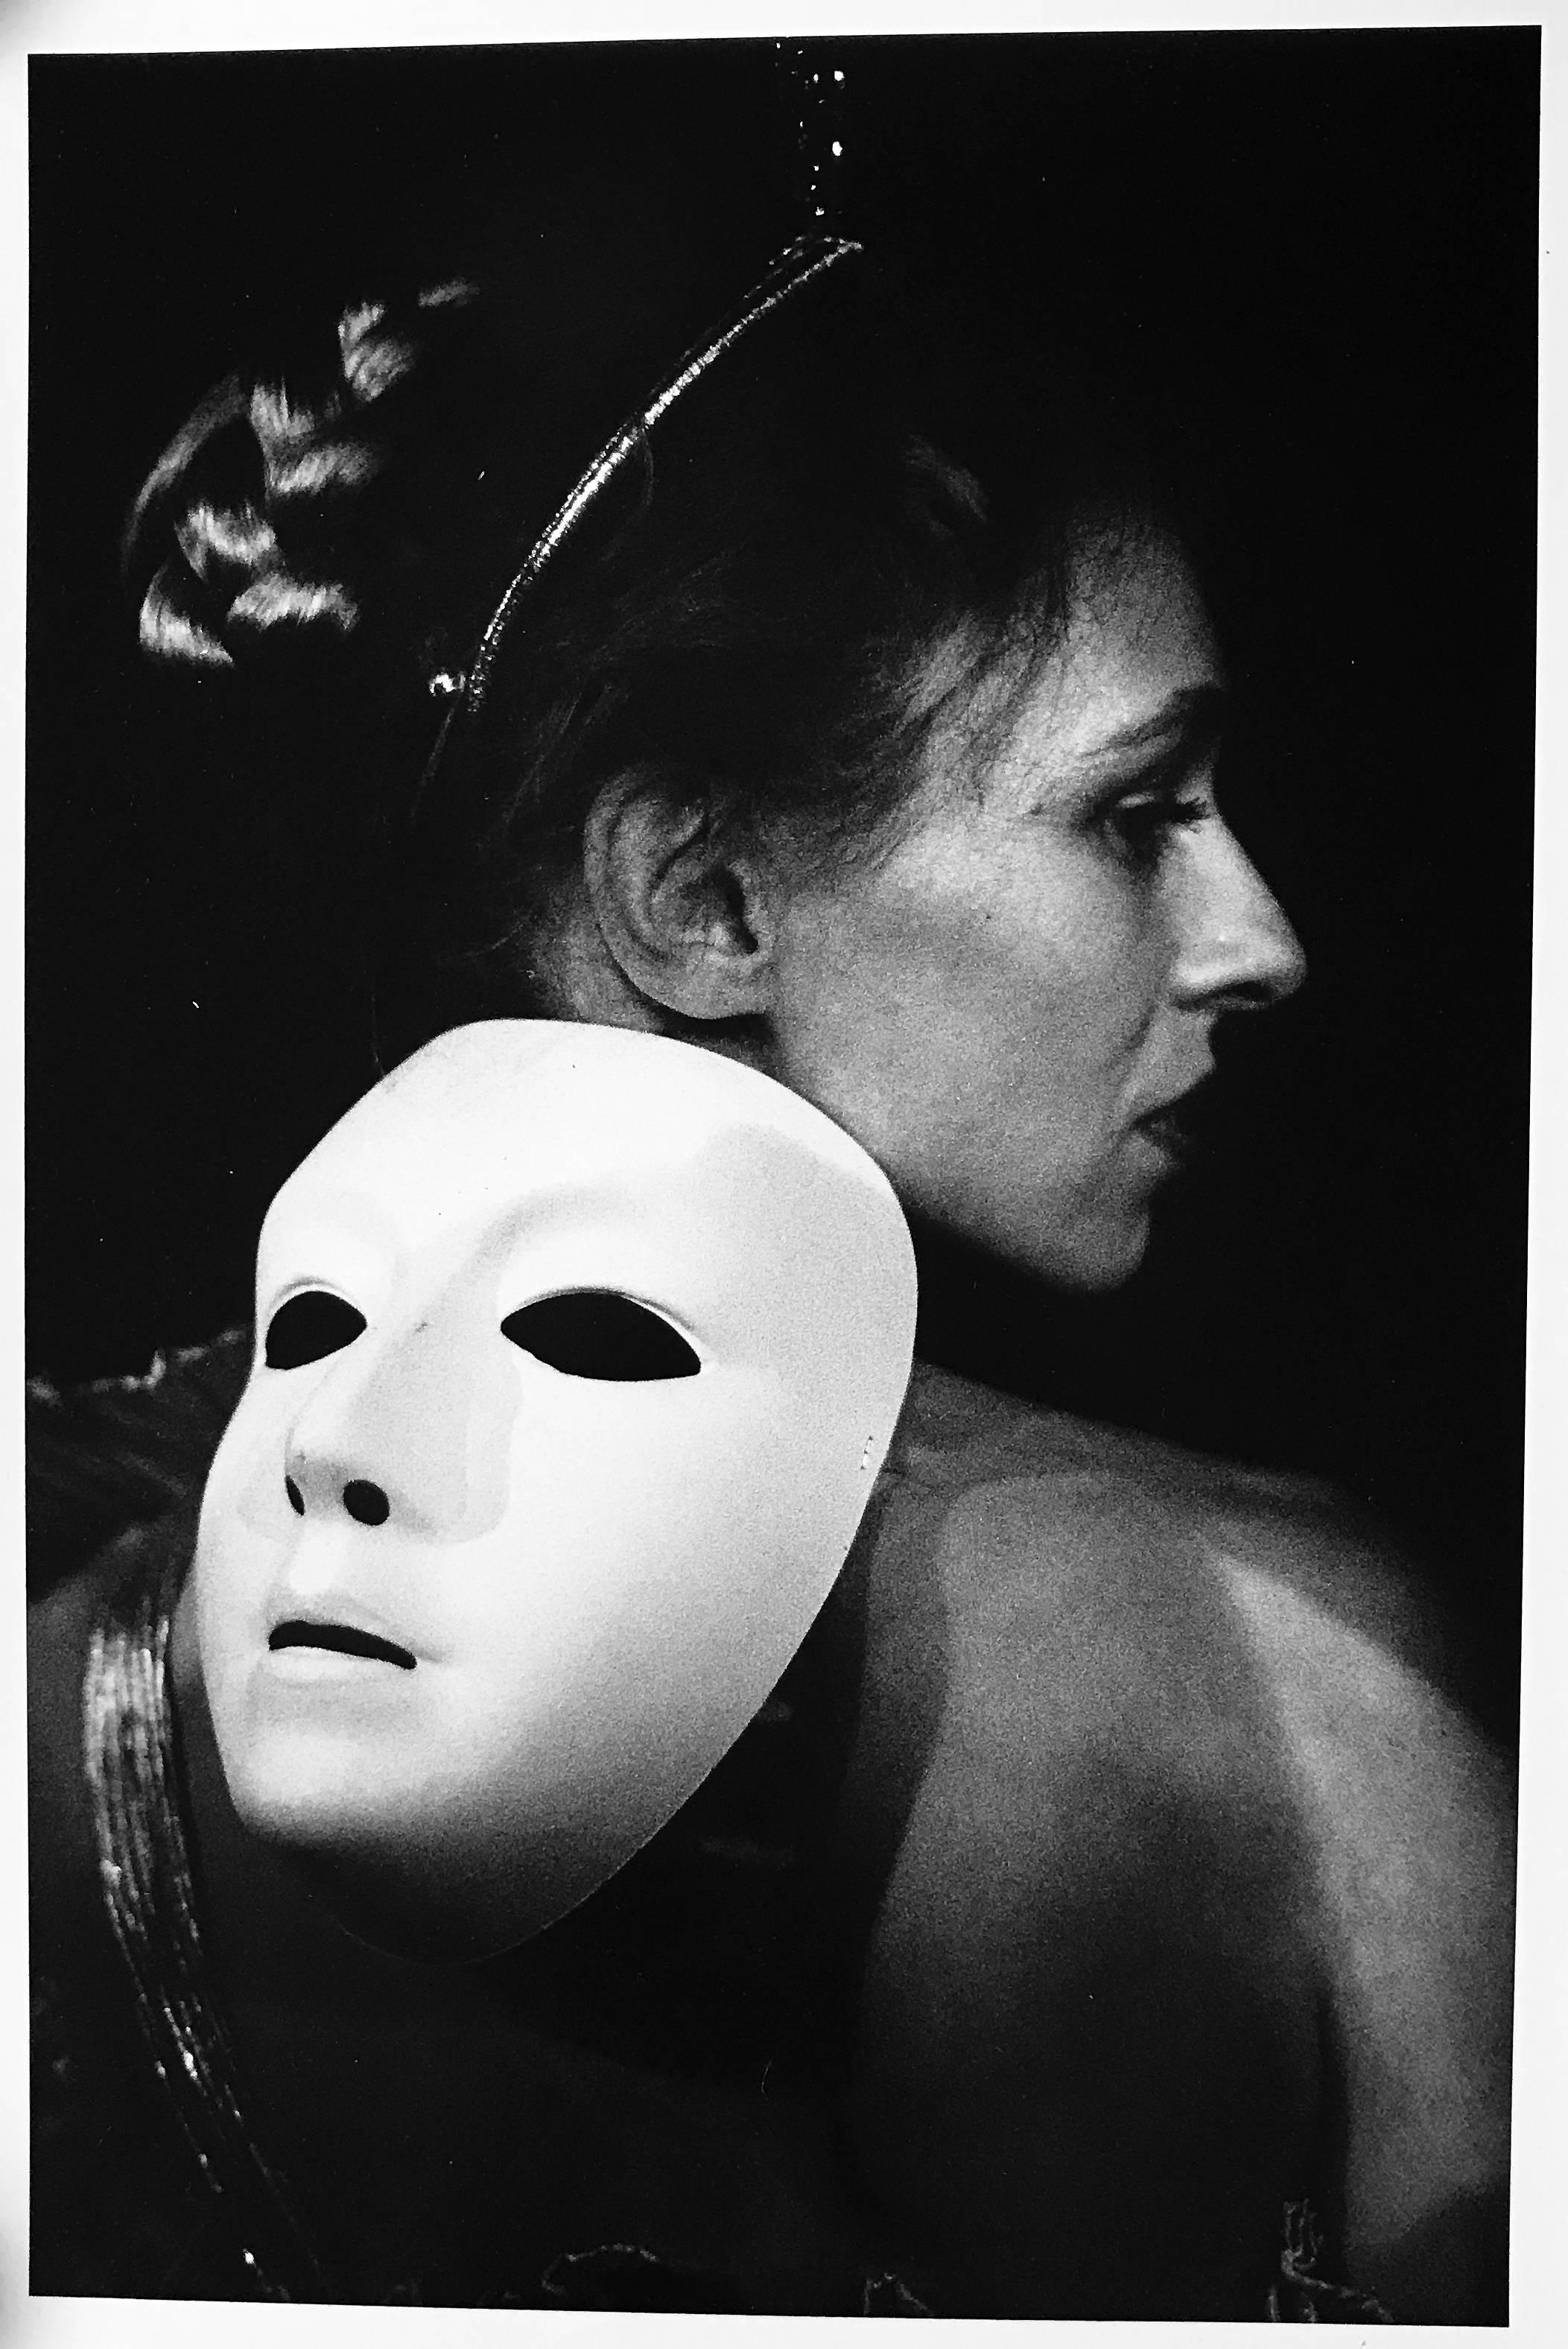 Diane the Huntress, France, Mythology Inspired Black and White Portrait Photo - Photograph by Roberta Fineberg